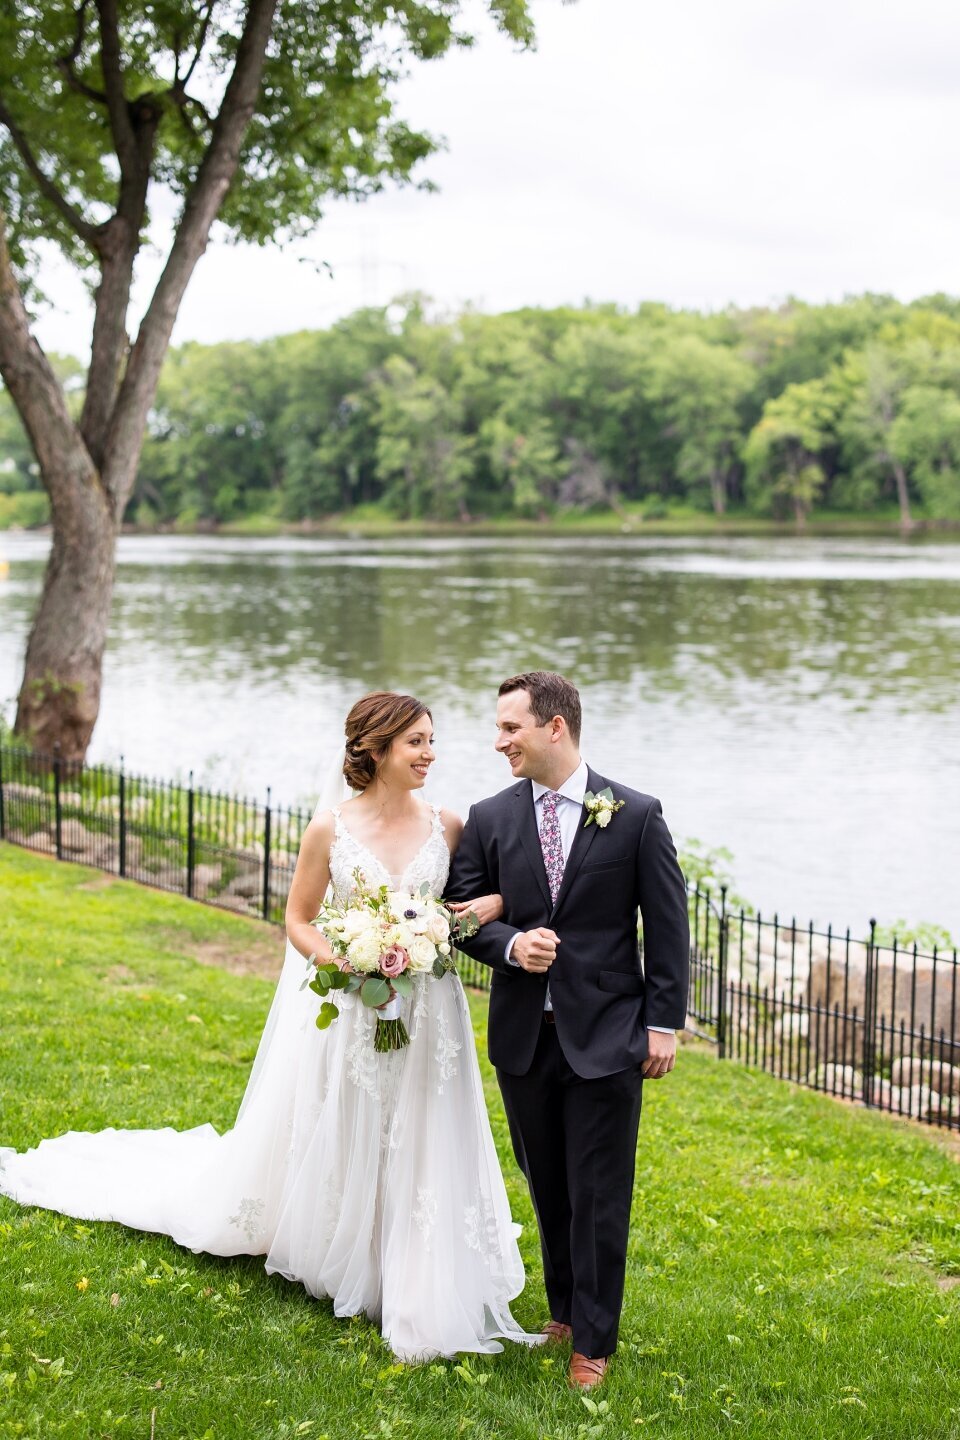 Eric Vest Photography - Leopold's Mississippi Gardens Wedding (53)